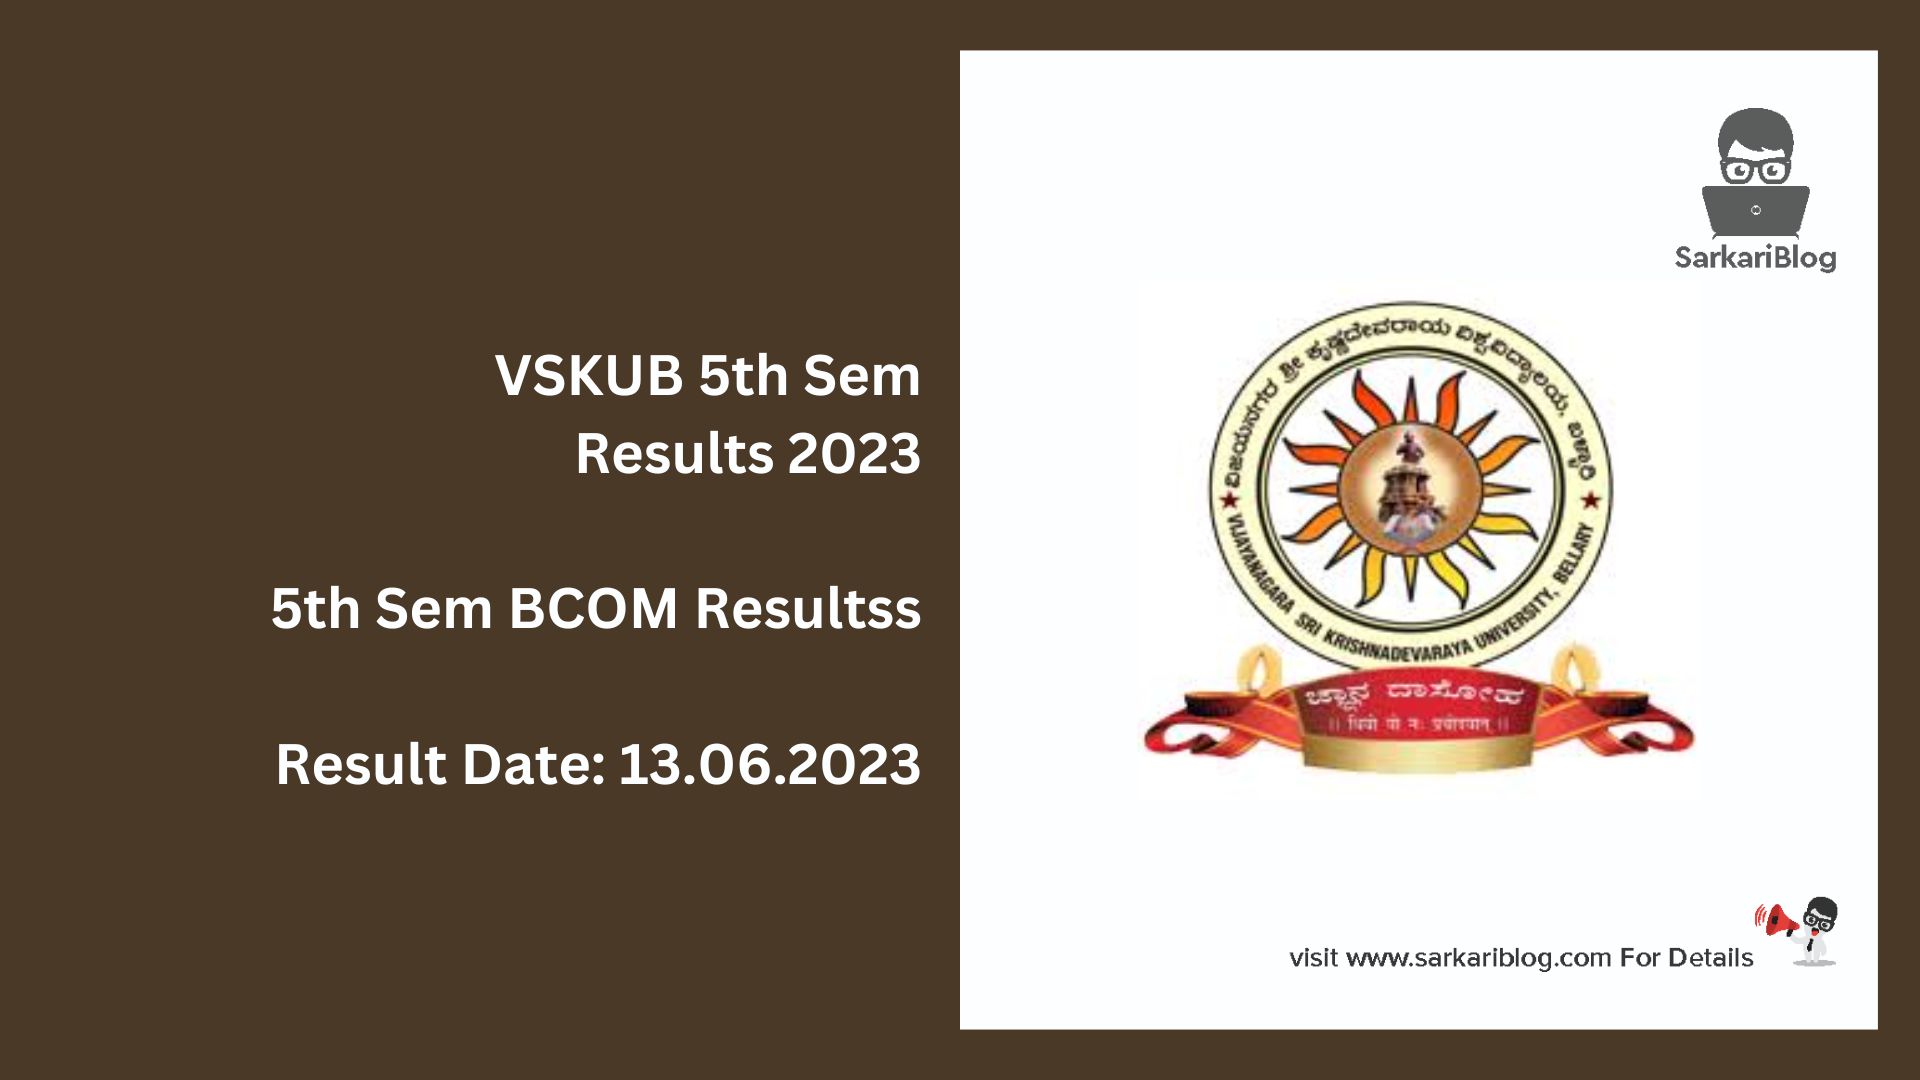 VSKUB 5th Sem Results 2023